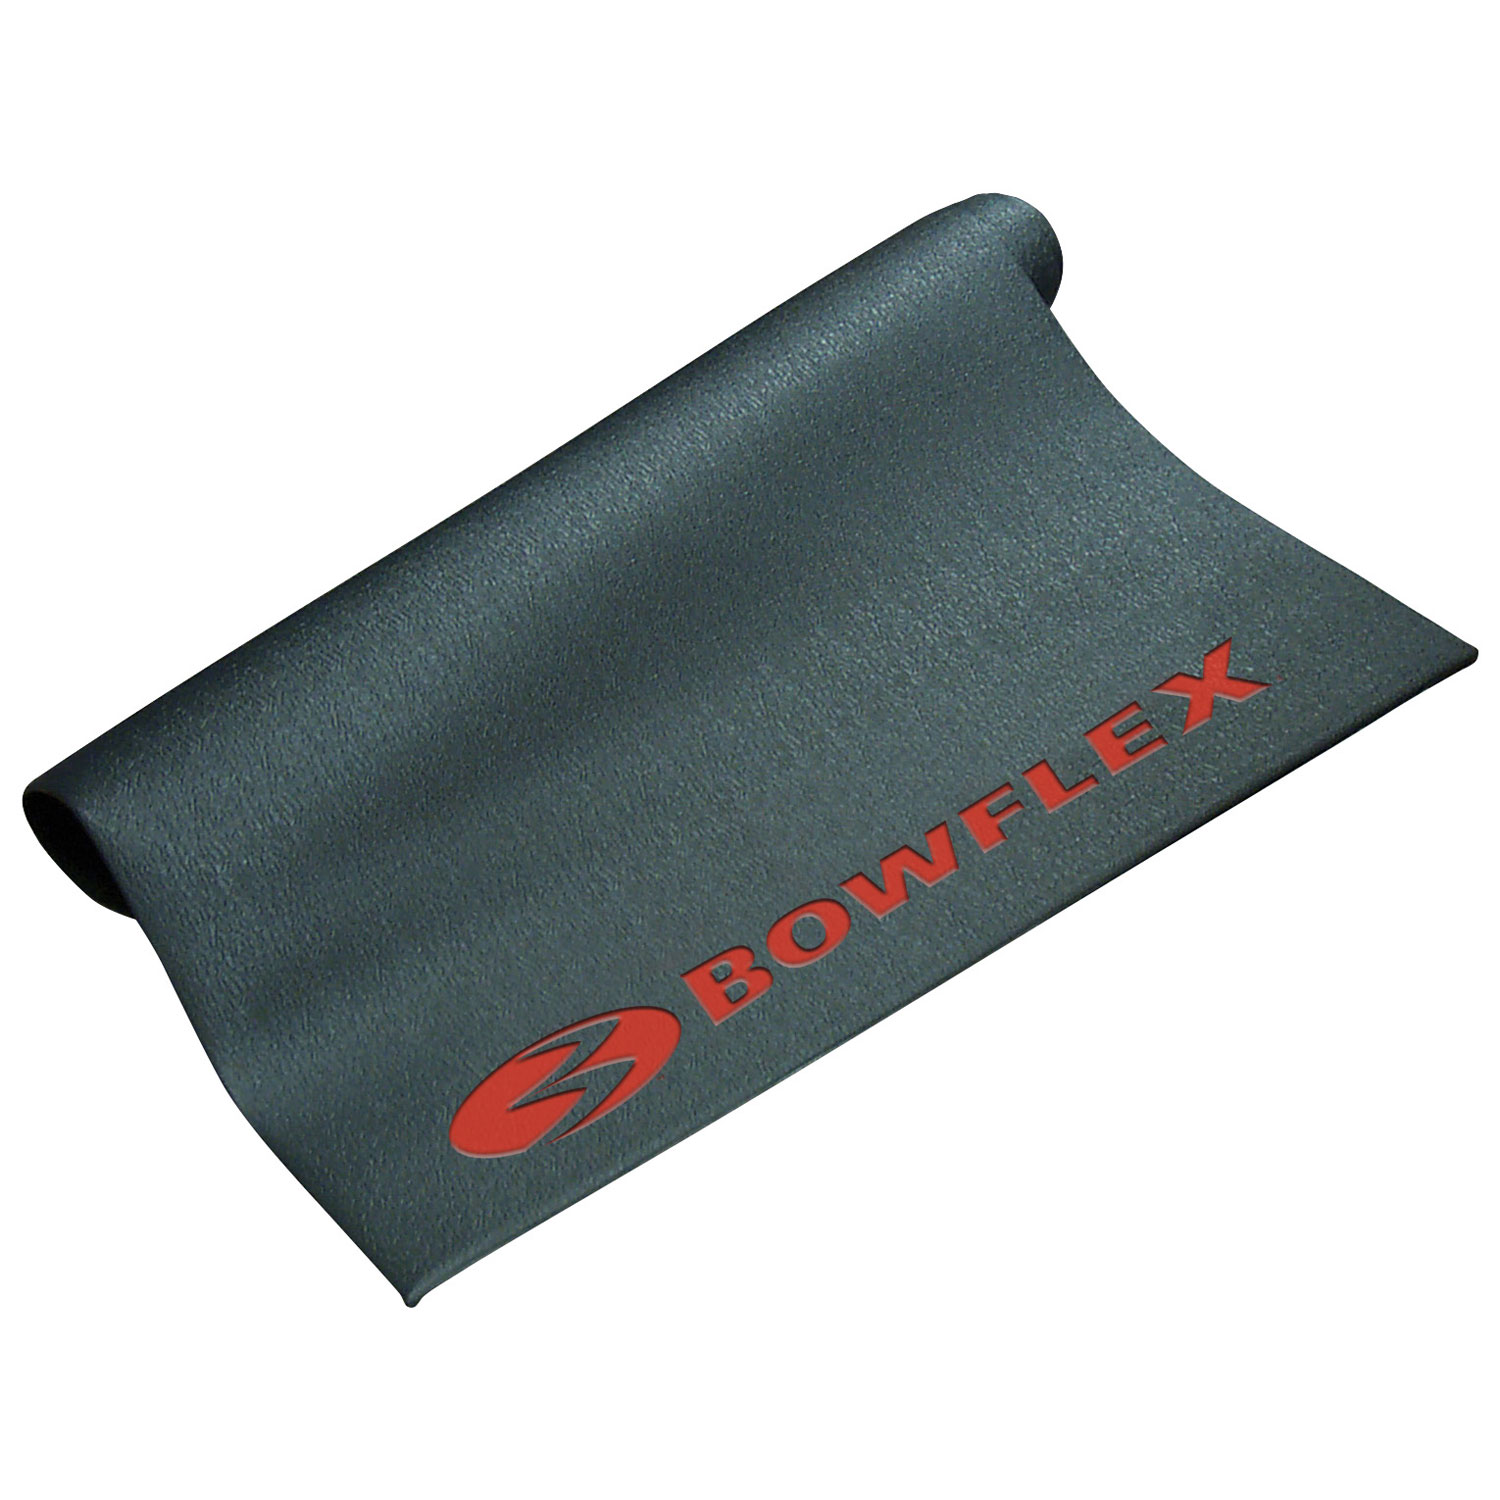 Bowflex gym mat